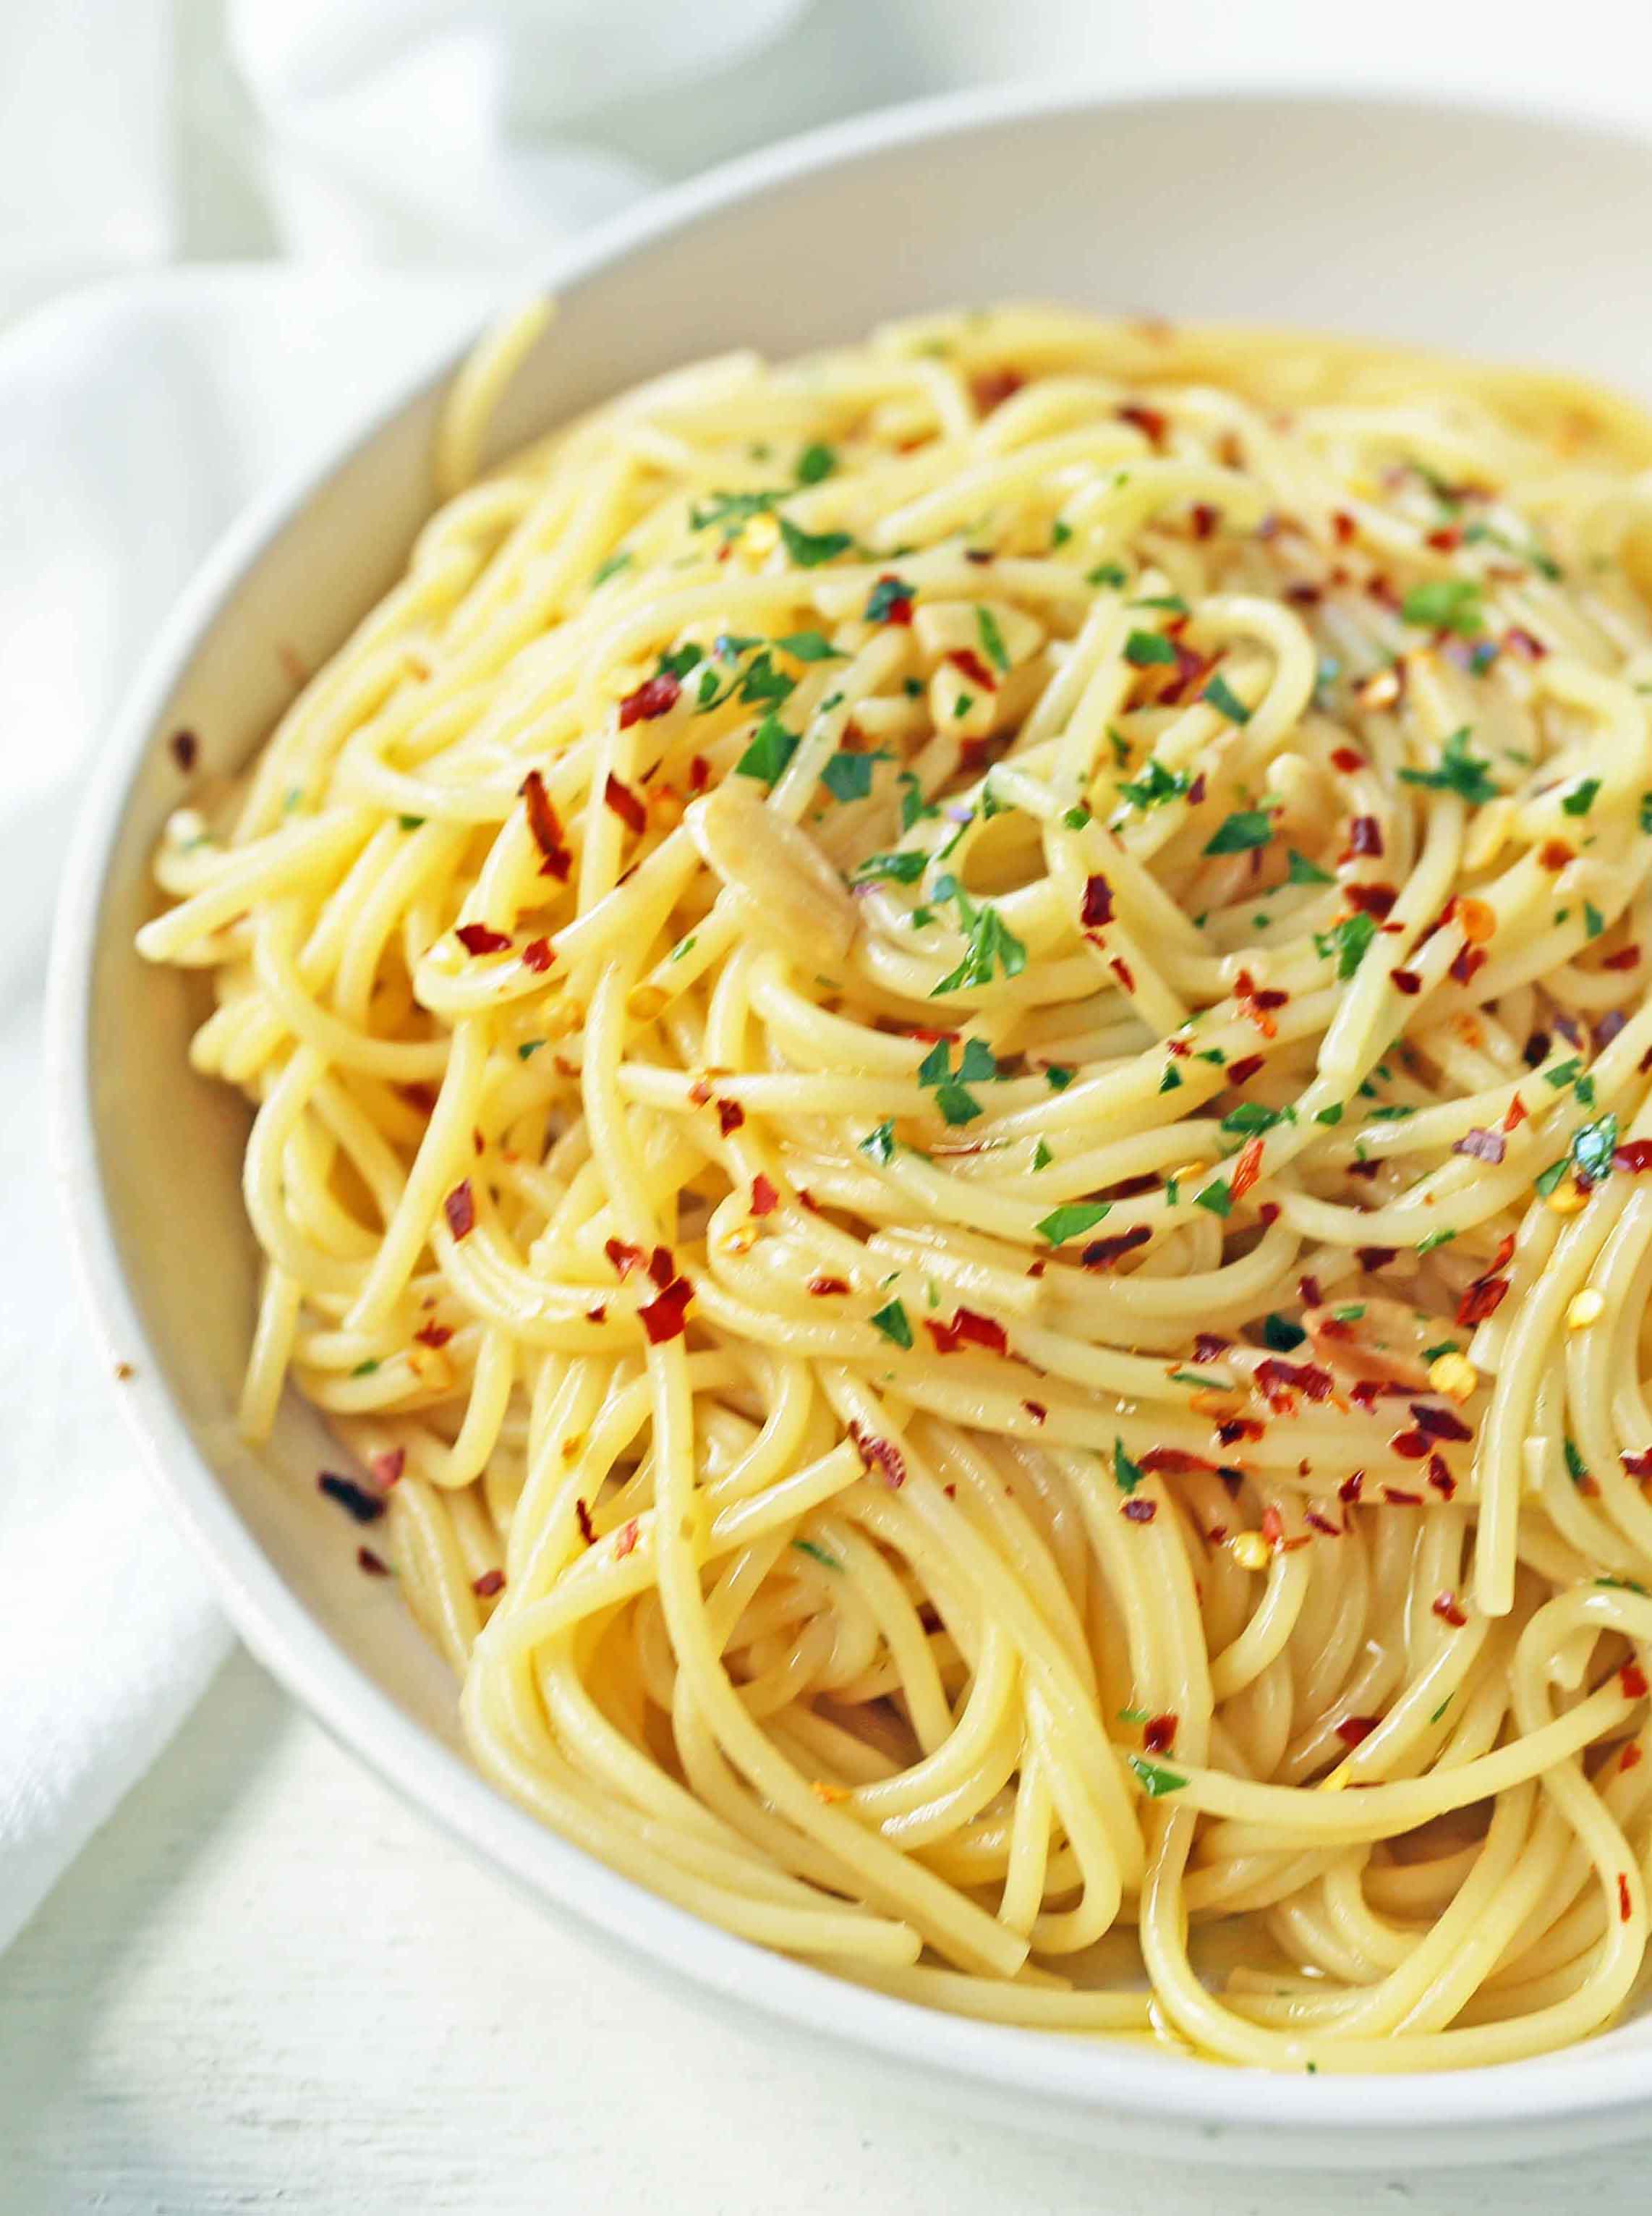 Spaghetti Aglio e Olio. Spaghetti tossed in sauteed garlic, olive oil, red pepper flakes, and fresh parsley. A quick and easy authentic pasta dish! Spaghetti with Garlic and Oil is 20 minute meal. www.modernhoney.com #pasta #spaghetti 